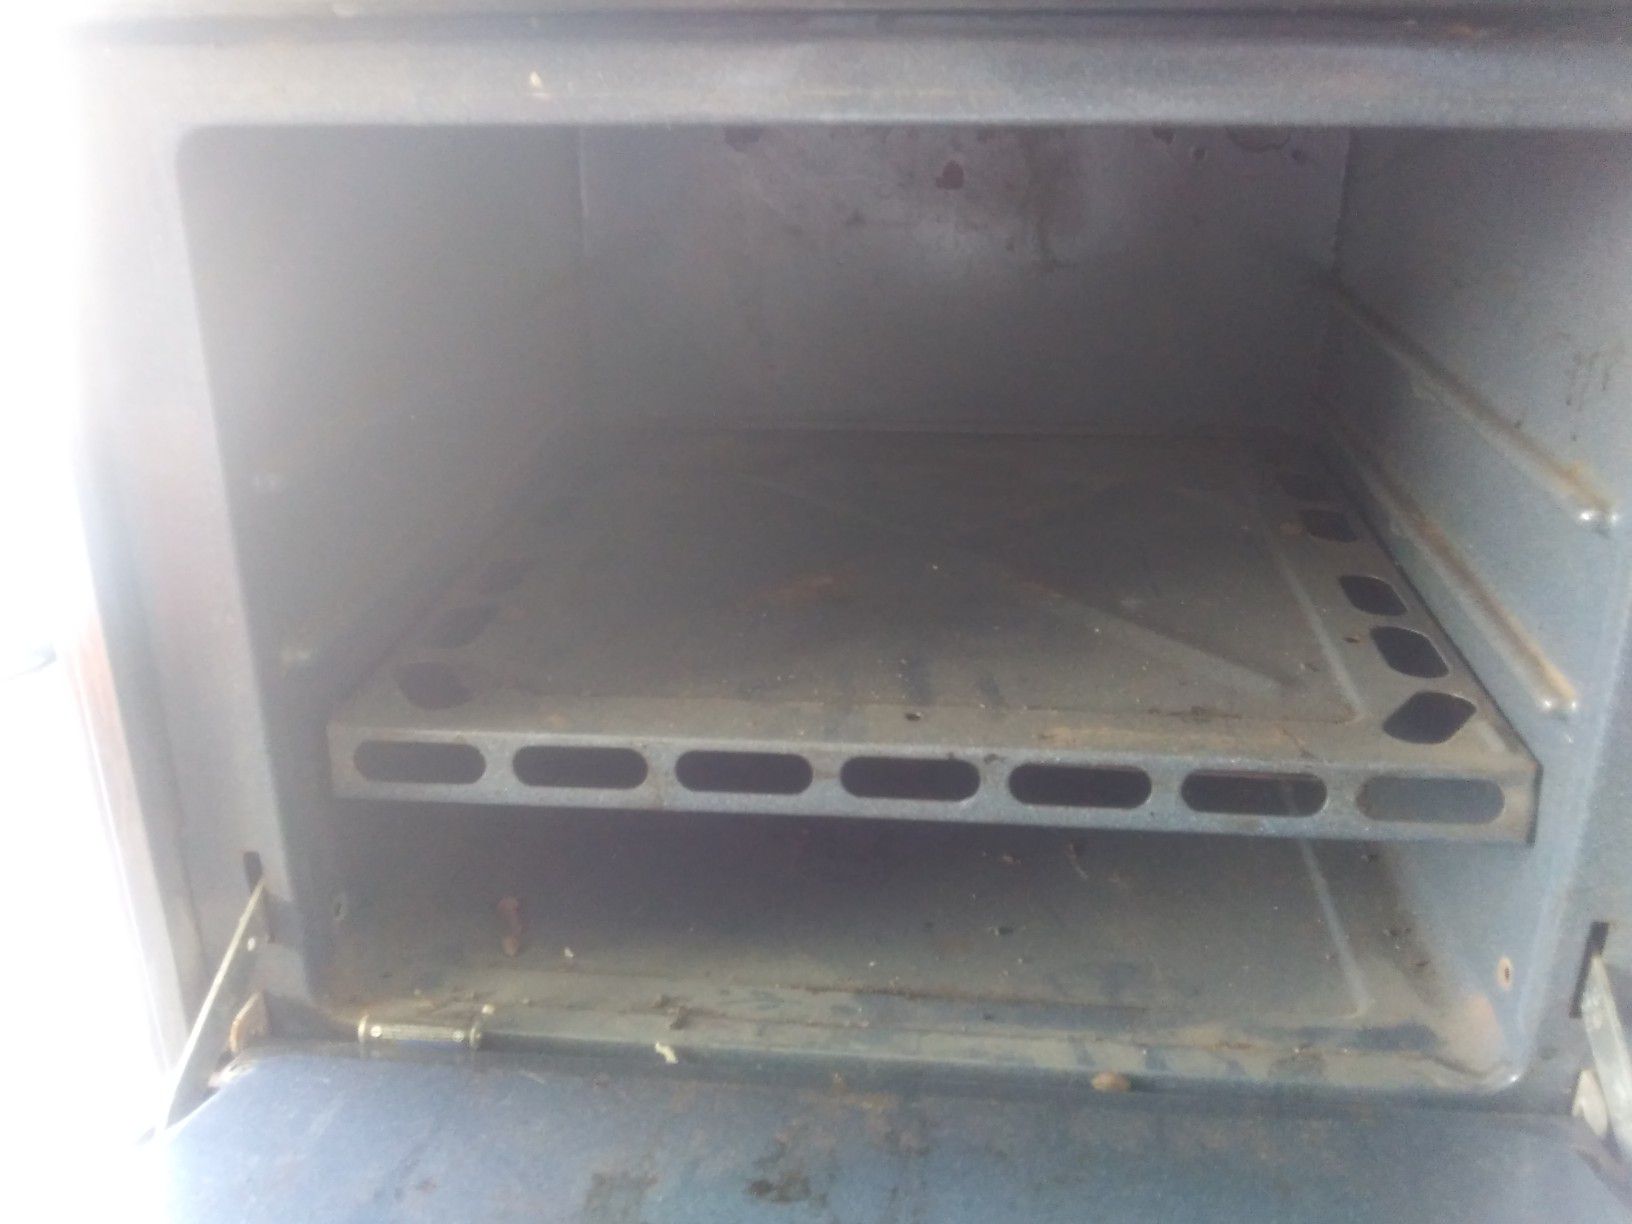 Travel trailer stove / oven